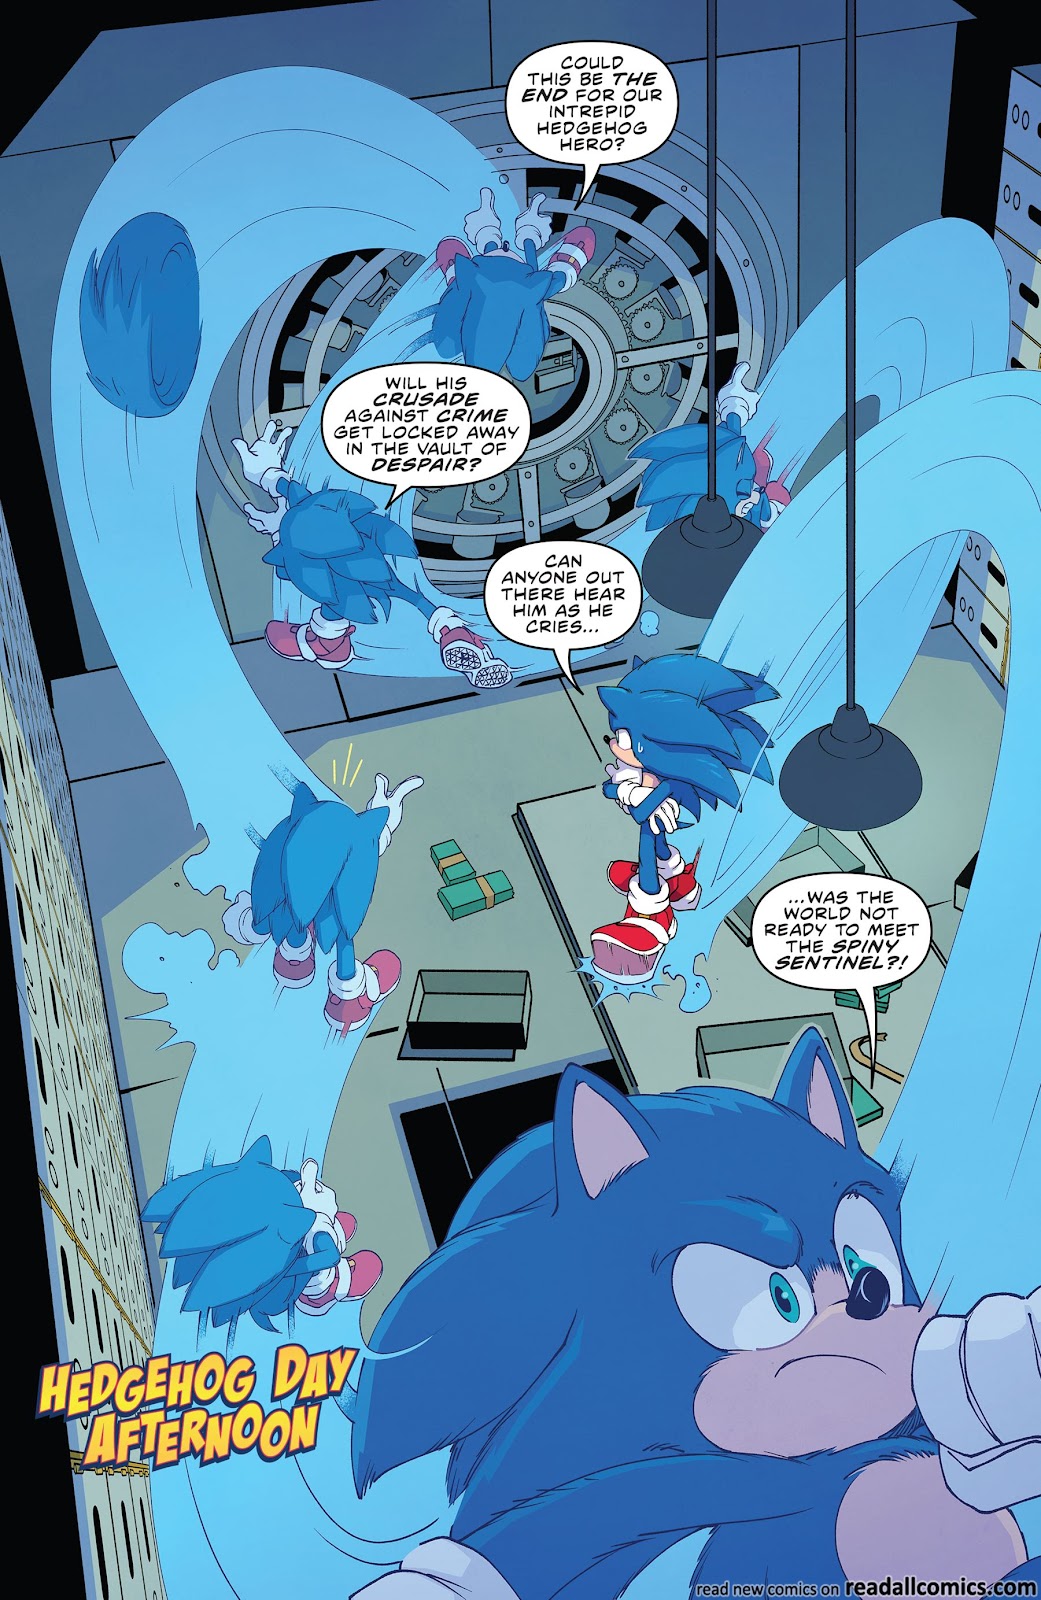 Sonic the Hedgehog 2 (2022) Fridge Magnet #1196799 Online